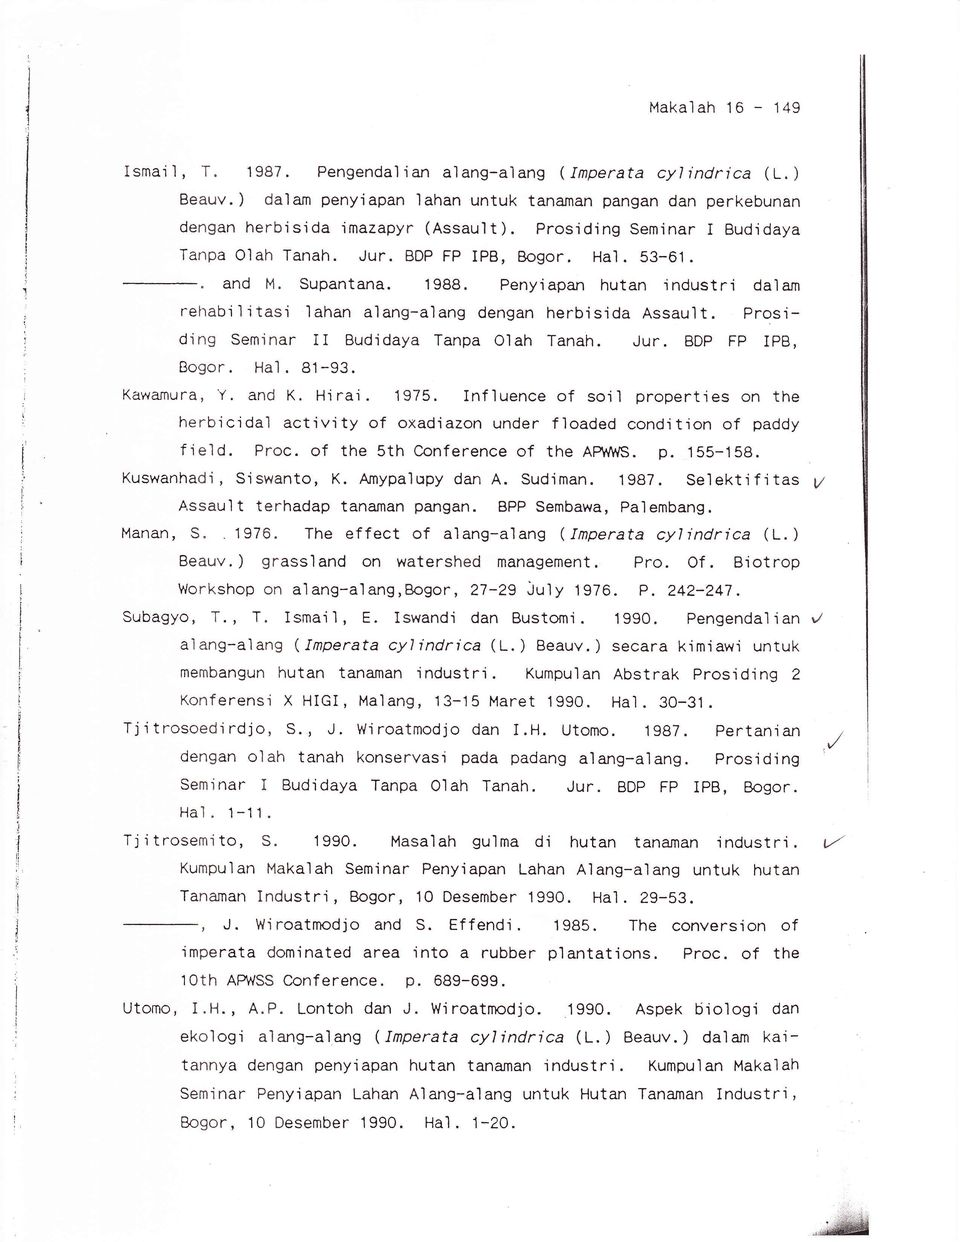 Prosiding Sem'inar II Budidaya Tanpa Olah Tanah. Jur. BDp Fp IpB, Bogor. Hal. 81-93. Kawamura, Y, and K. H'irai. '1975.